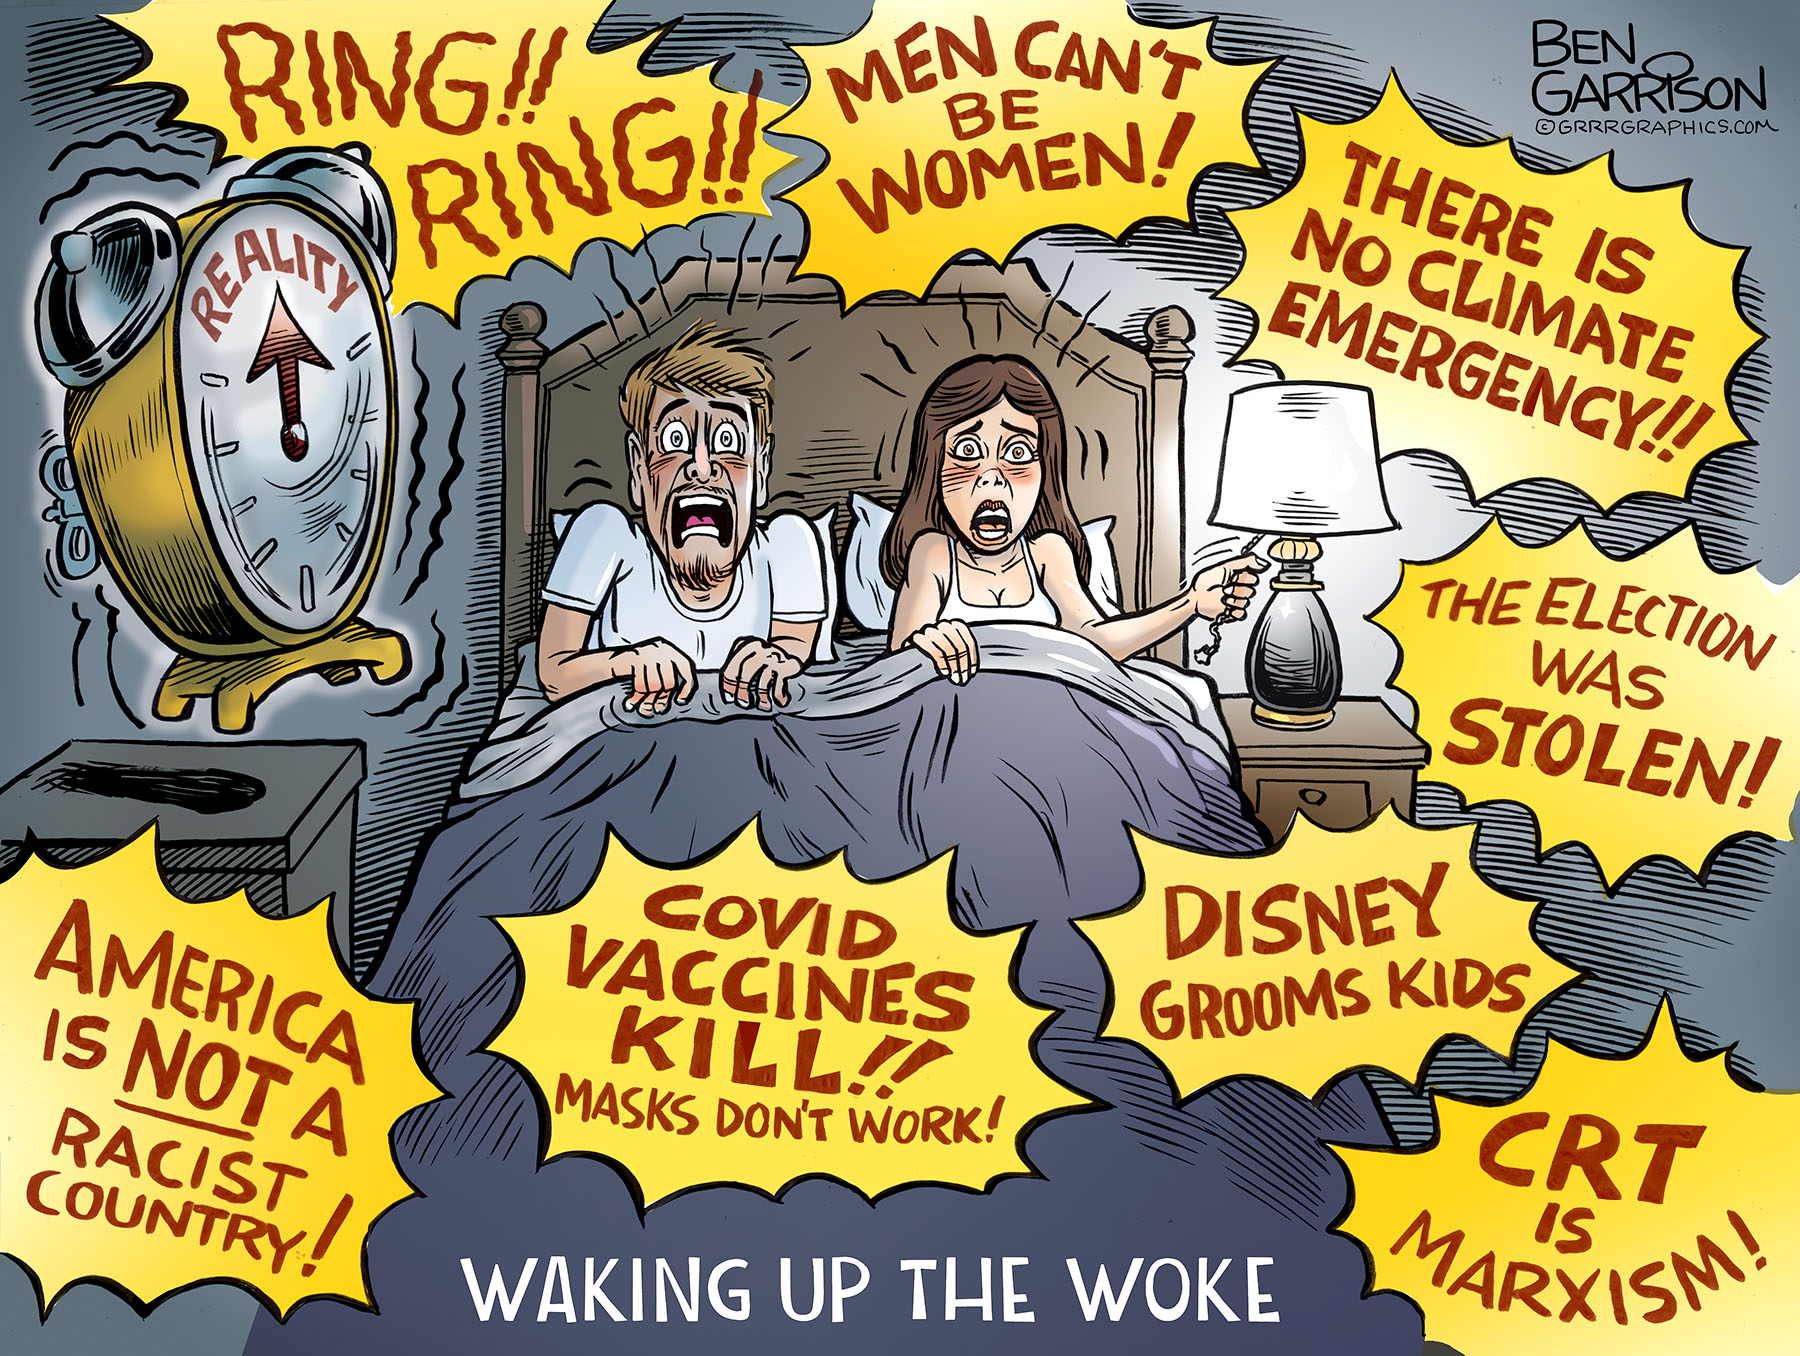 a Ben Garrison illustration : Waking Up The Woke